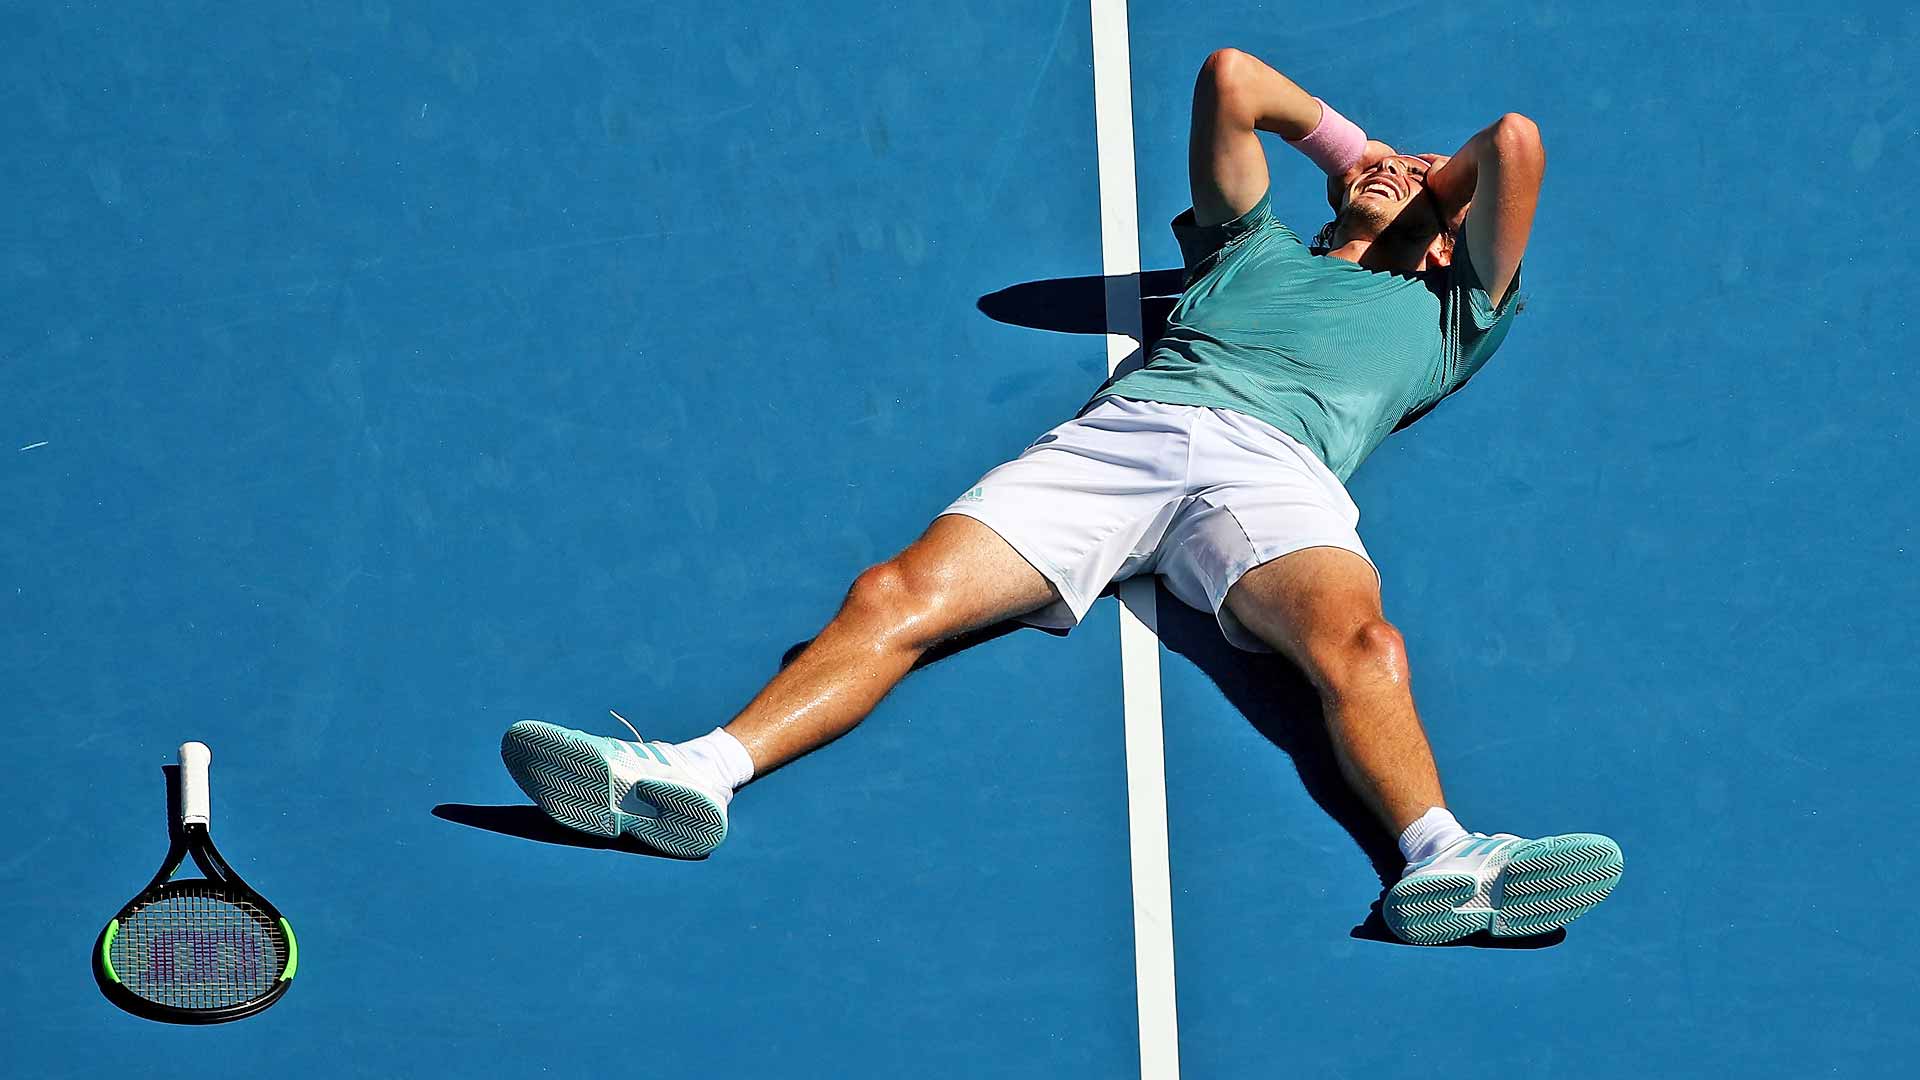 Tsitsipas Outworks Bautista Agut For Major Breakthrough In Melbourne | Next Gen ATP Finals